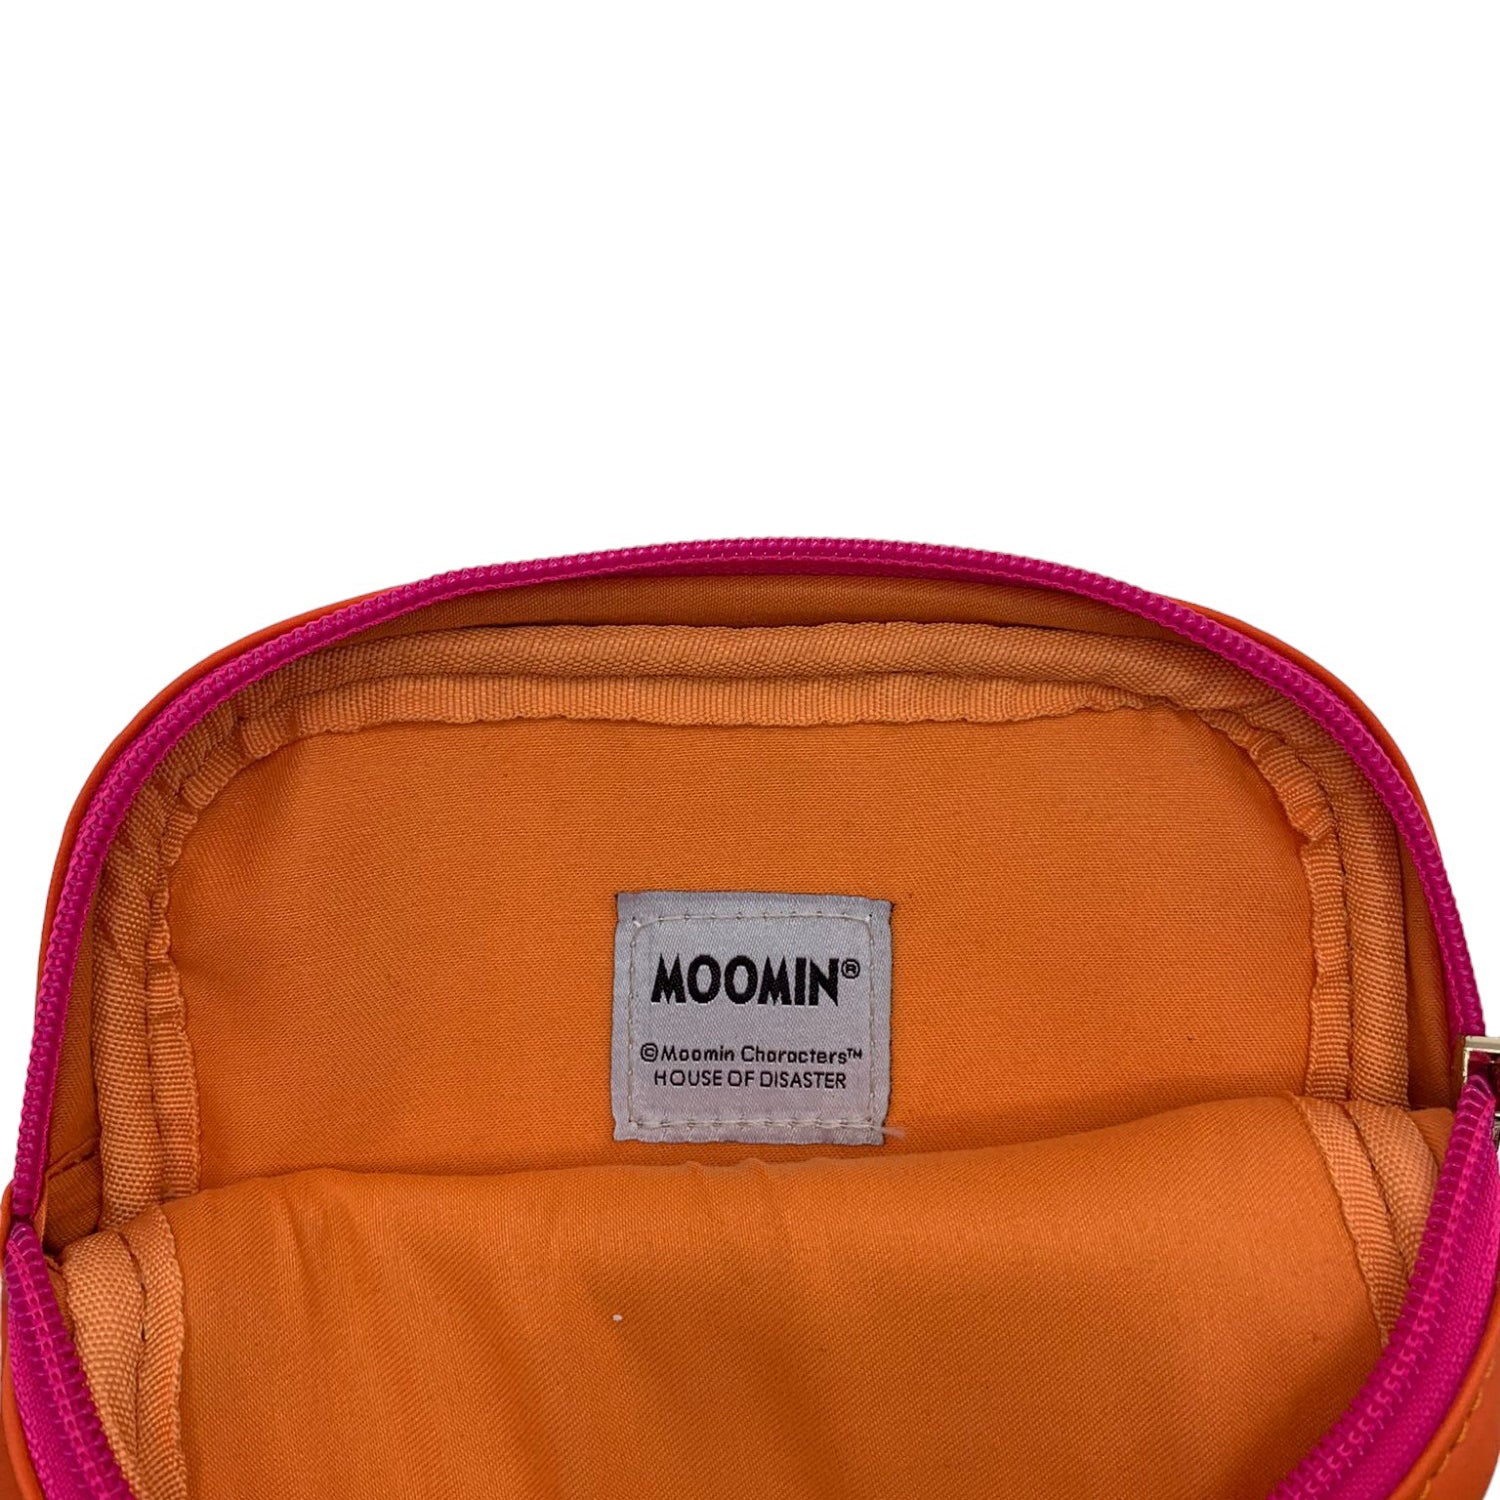 Moomin 'Idea' Makeup Bag